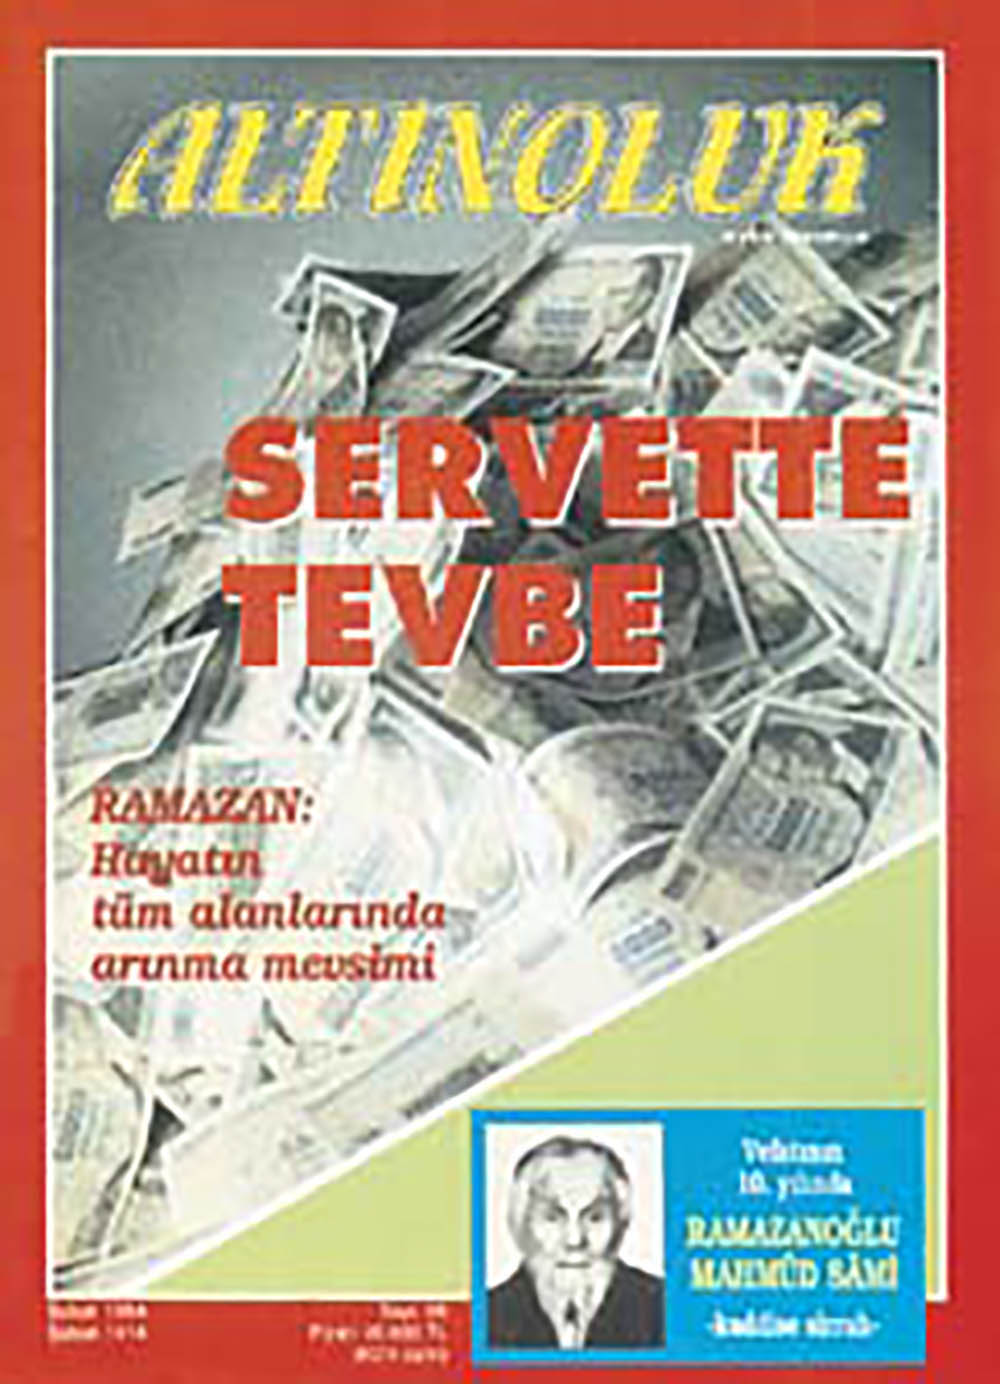 Servette Tevbe